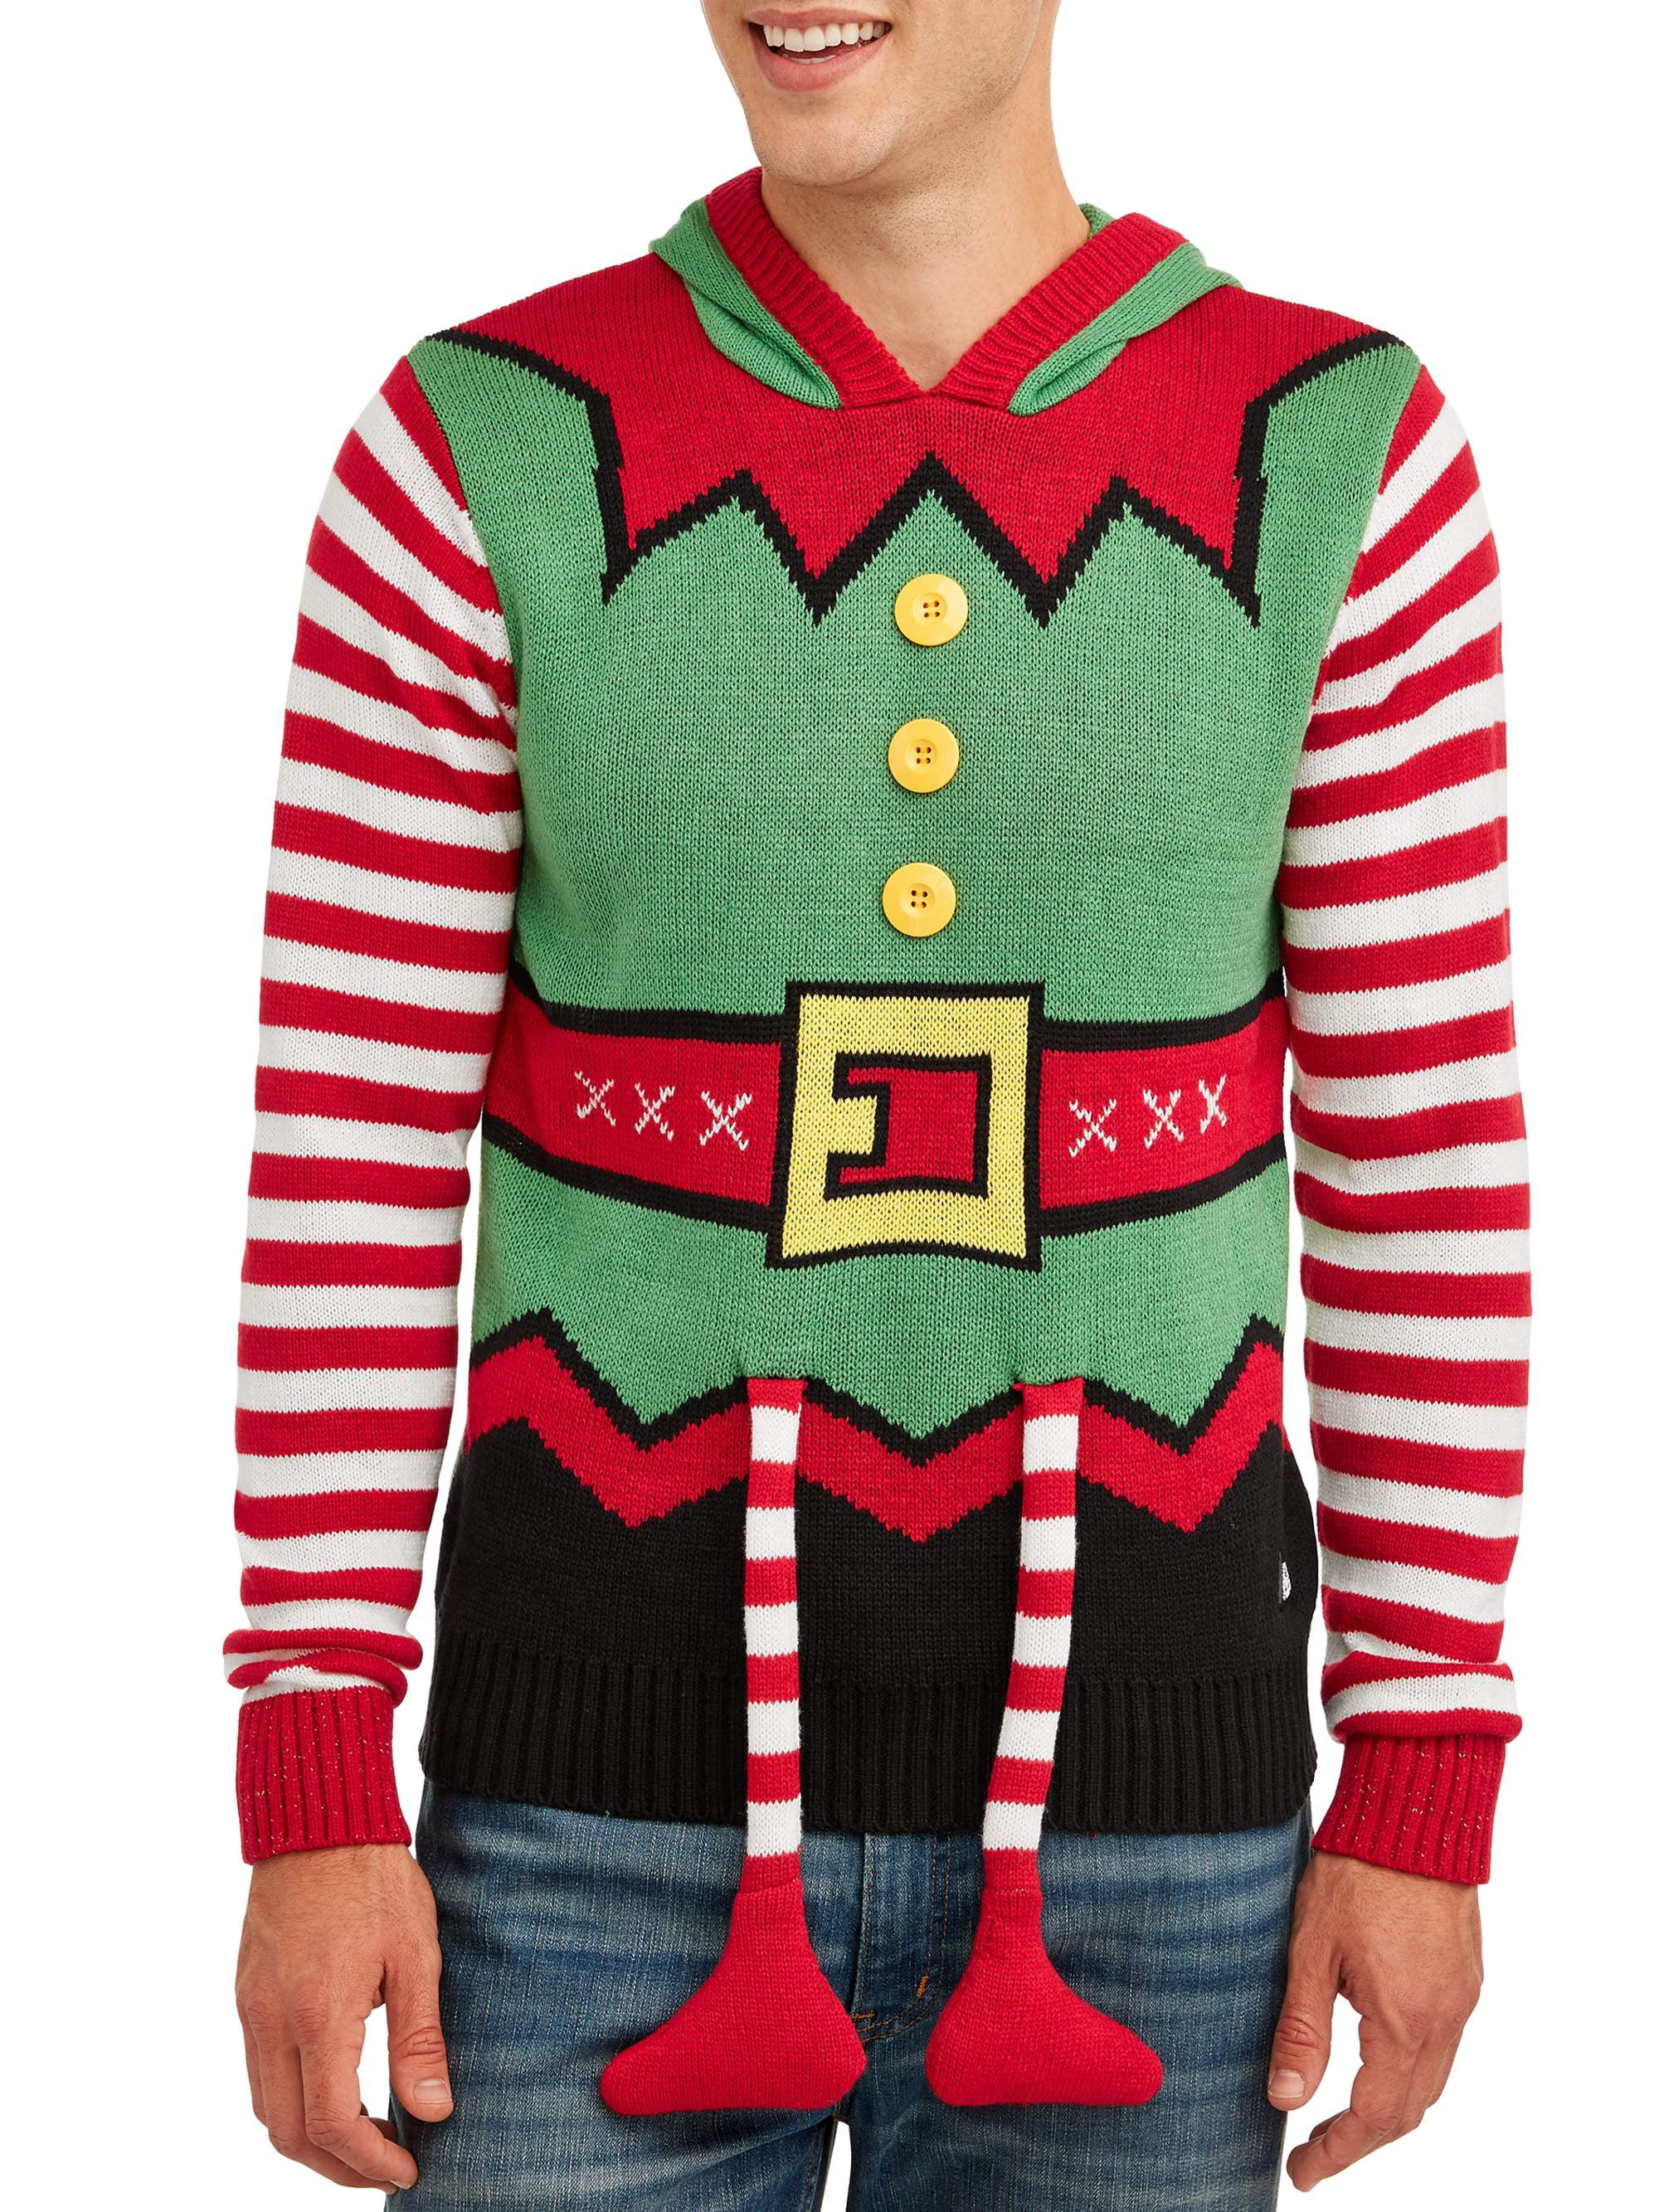 Elf Doll Clothing Elf Sweater Chips Elf Doll Costume Christmas Elf